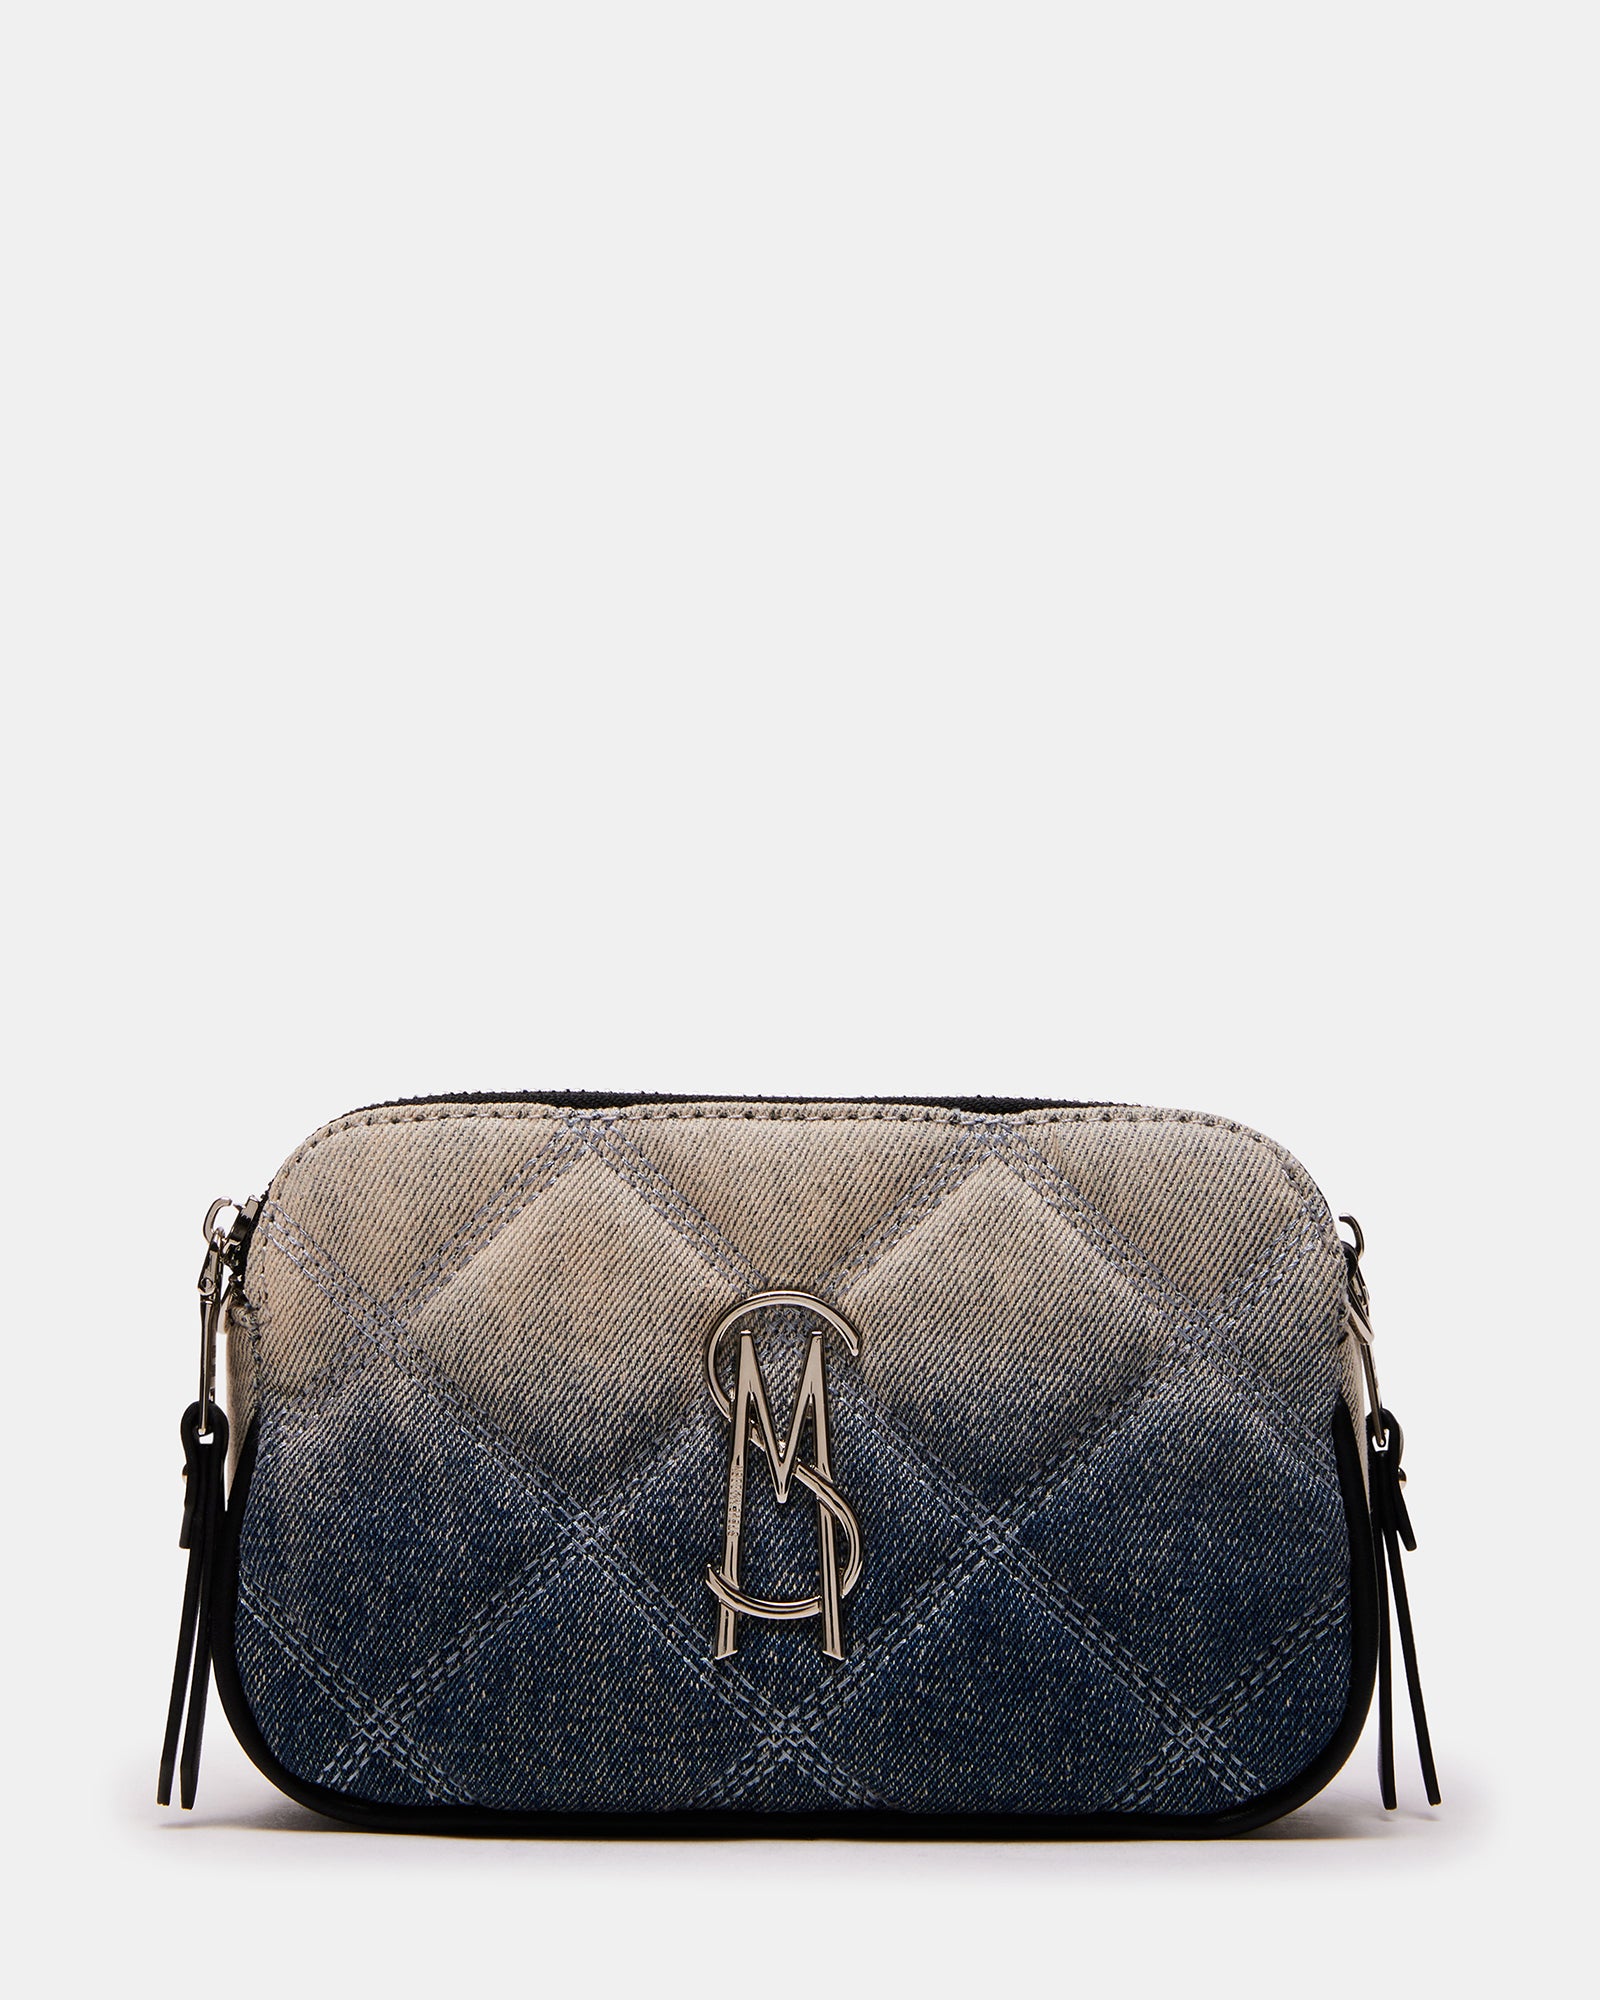 Louis+Vuitton+Camera+Crossbody+Blue+Denim for sale online